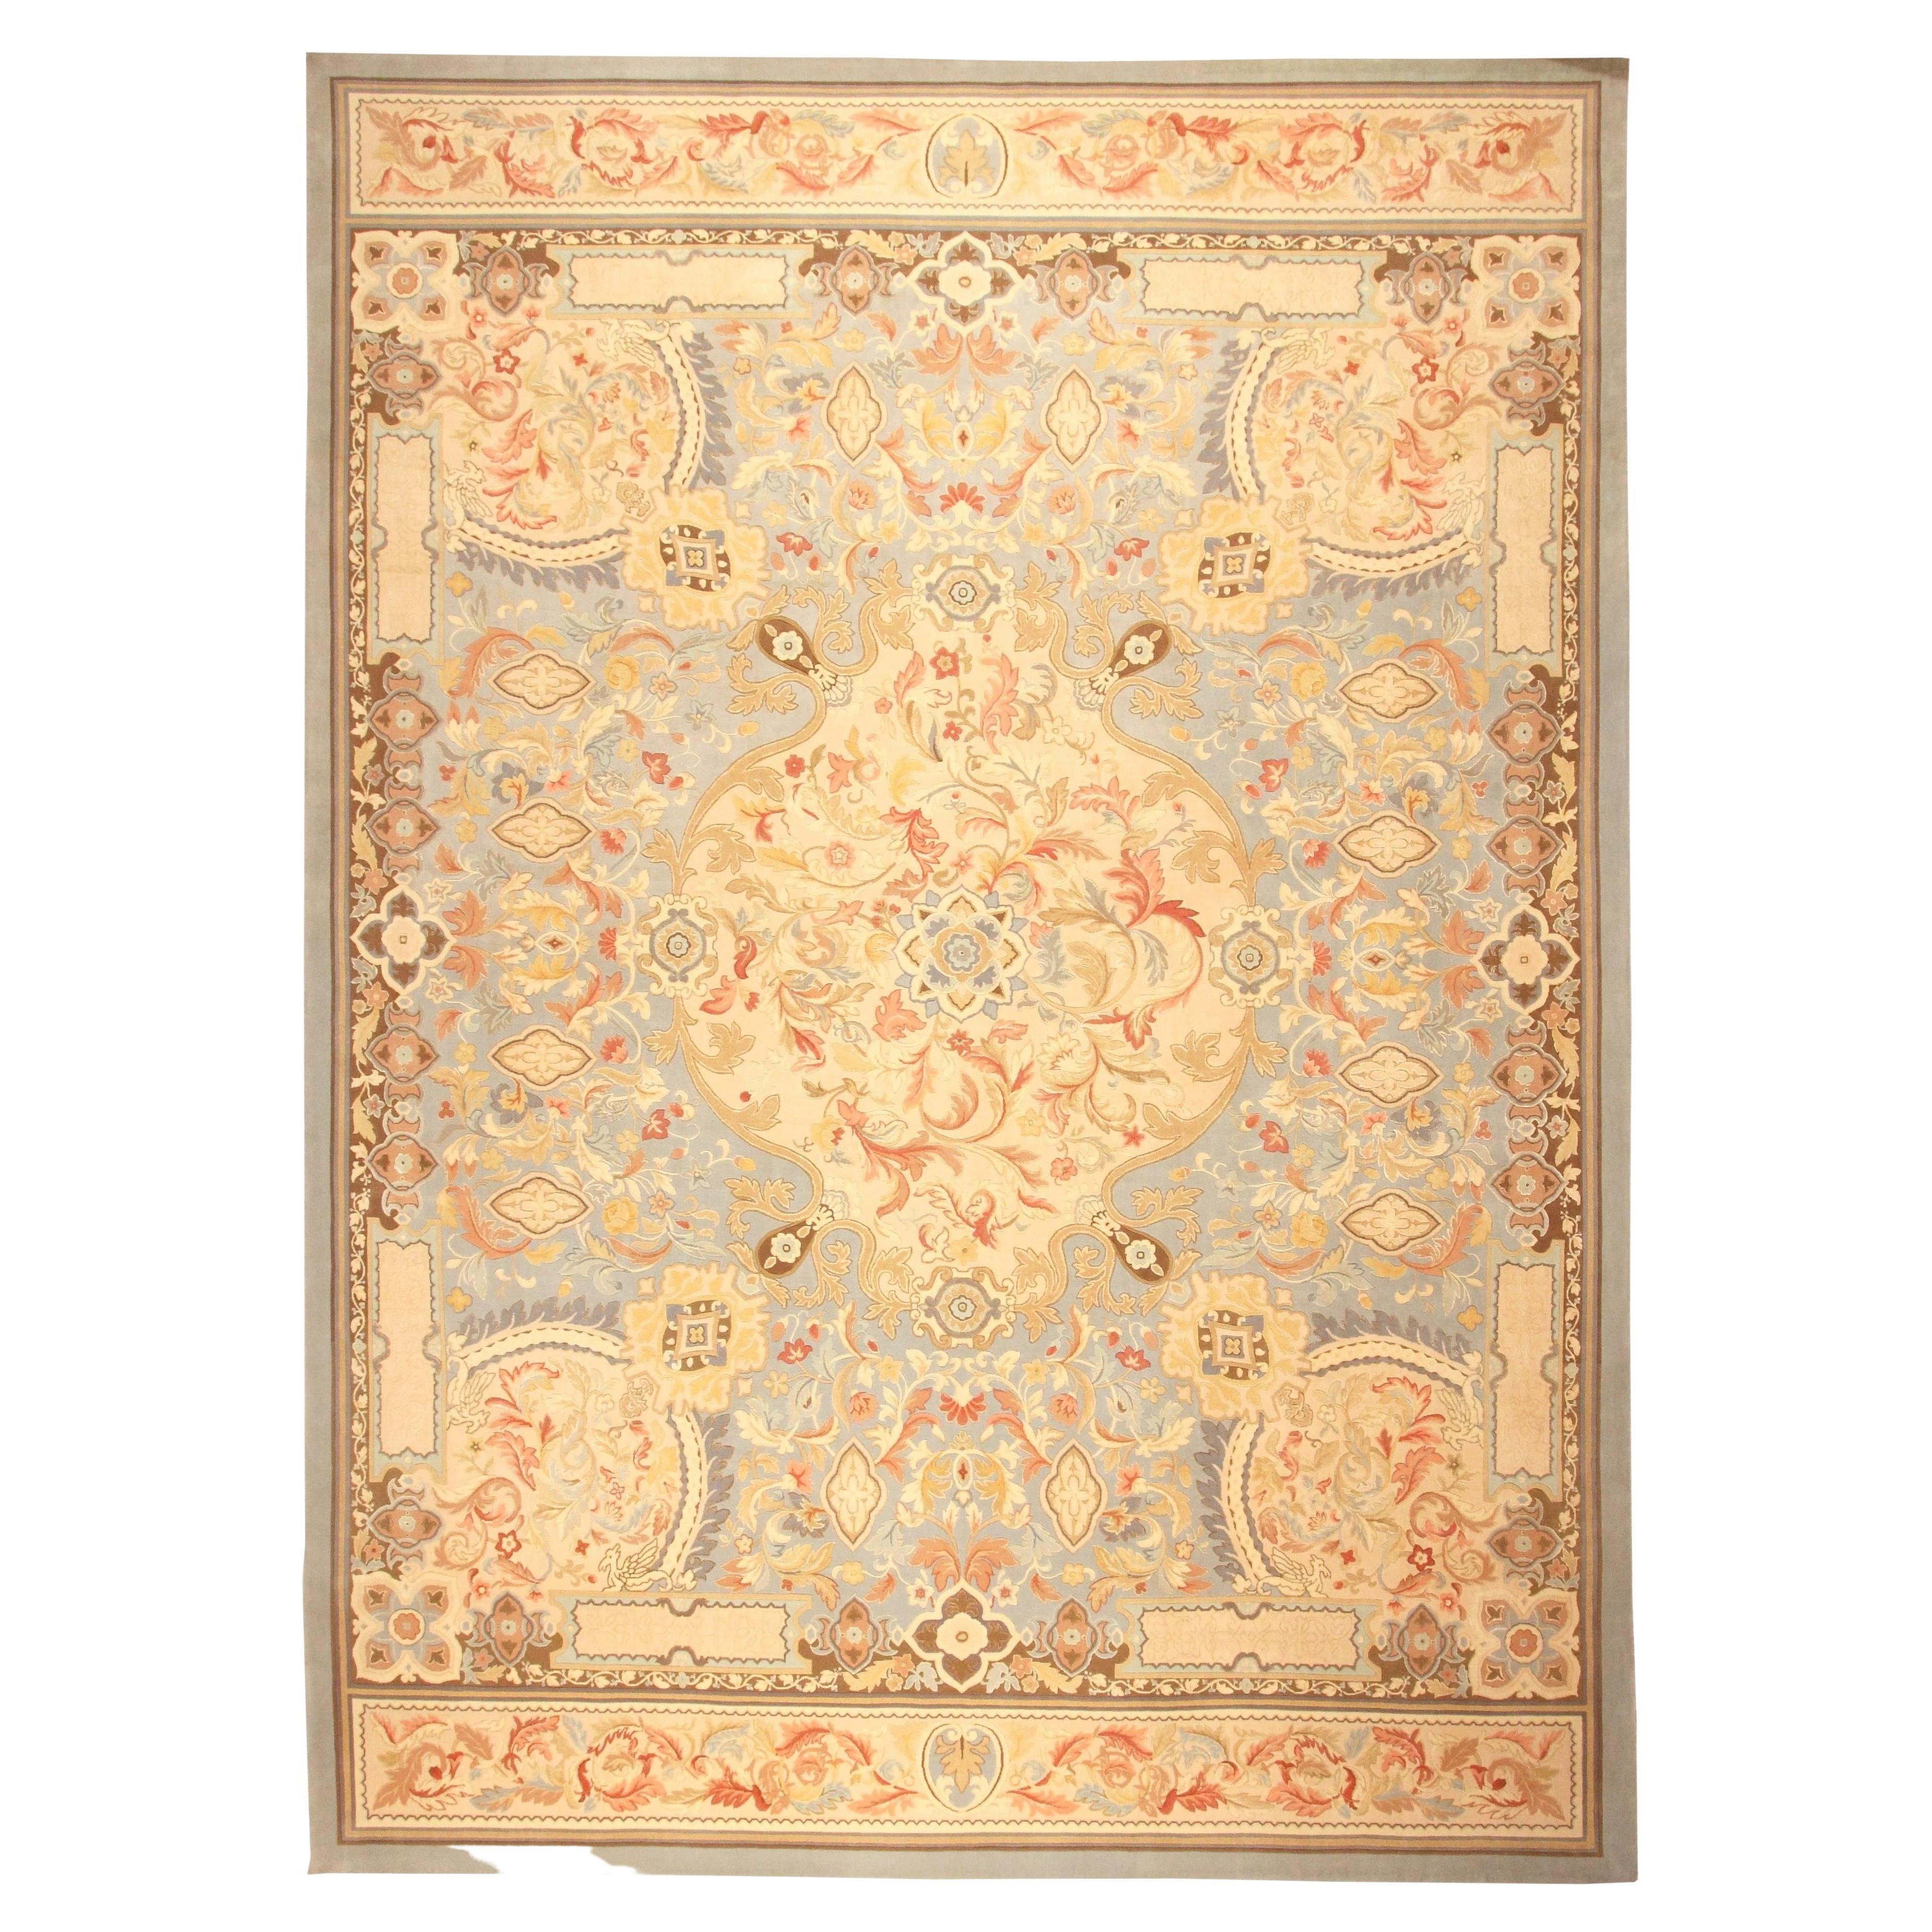 VIA COMO 'Amarangier' Rug Hand Knotted Wool Silk Carpet RARE 10x14 One of a kind